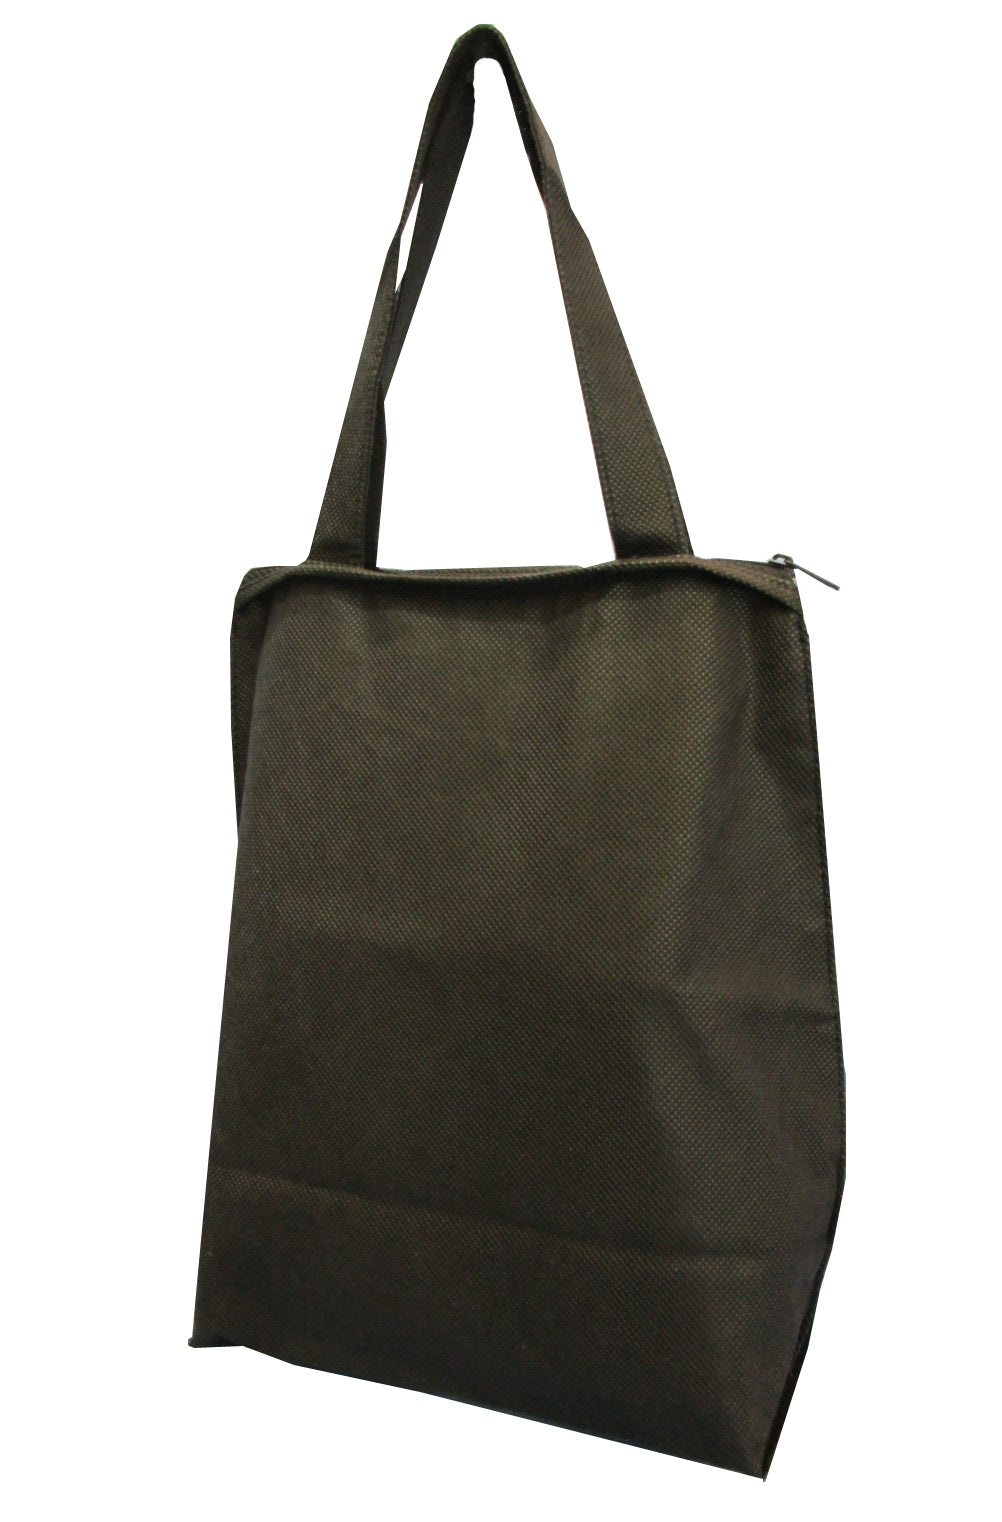 JLSB-0048 Sewn Bag